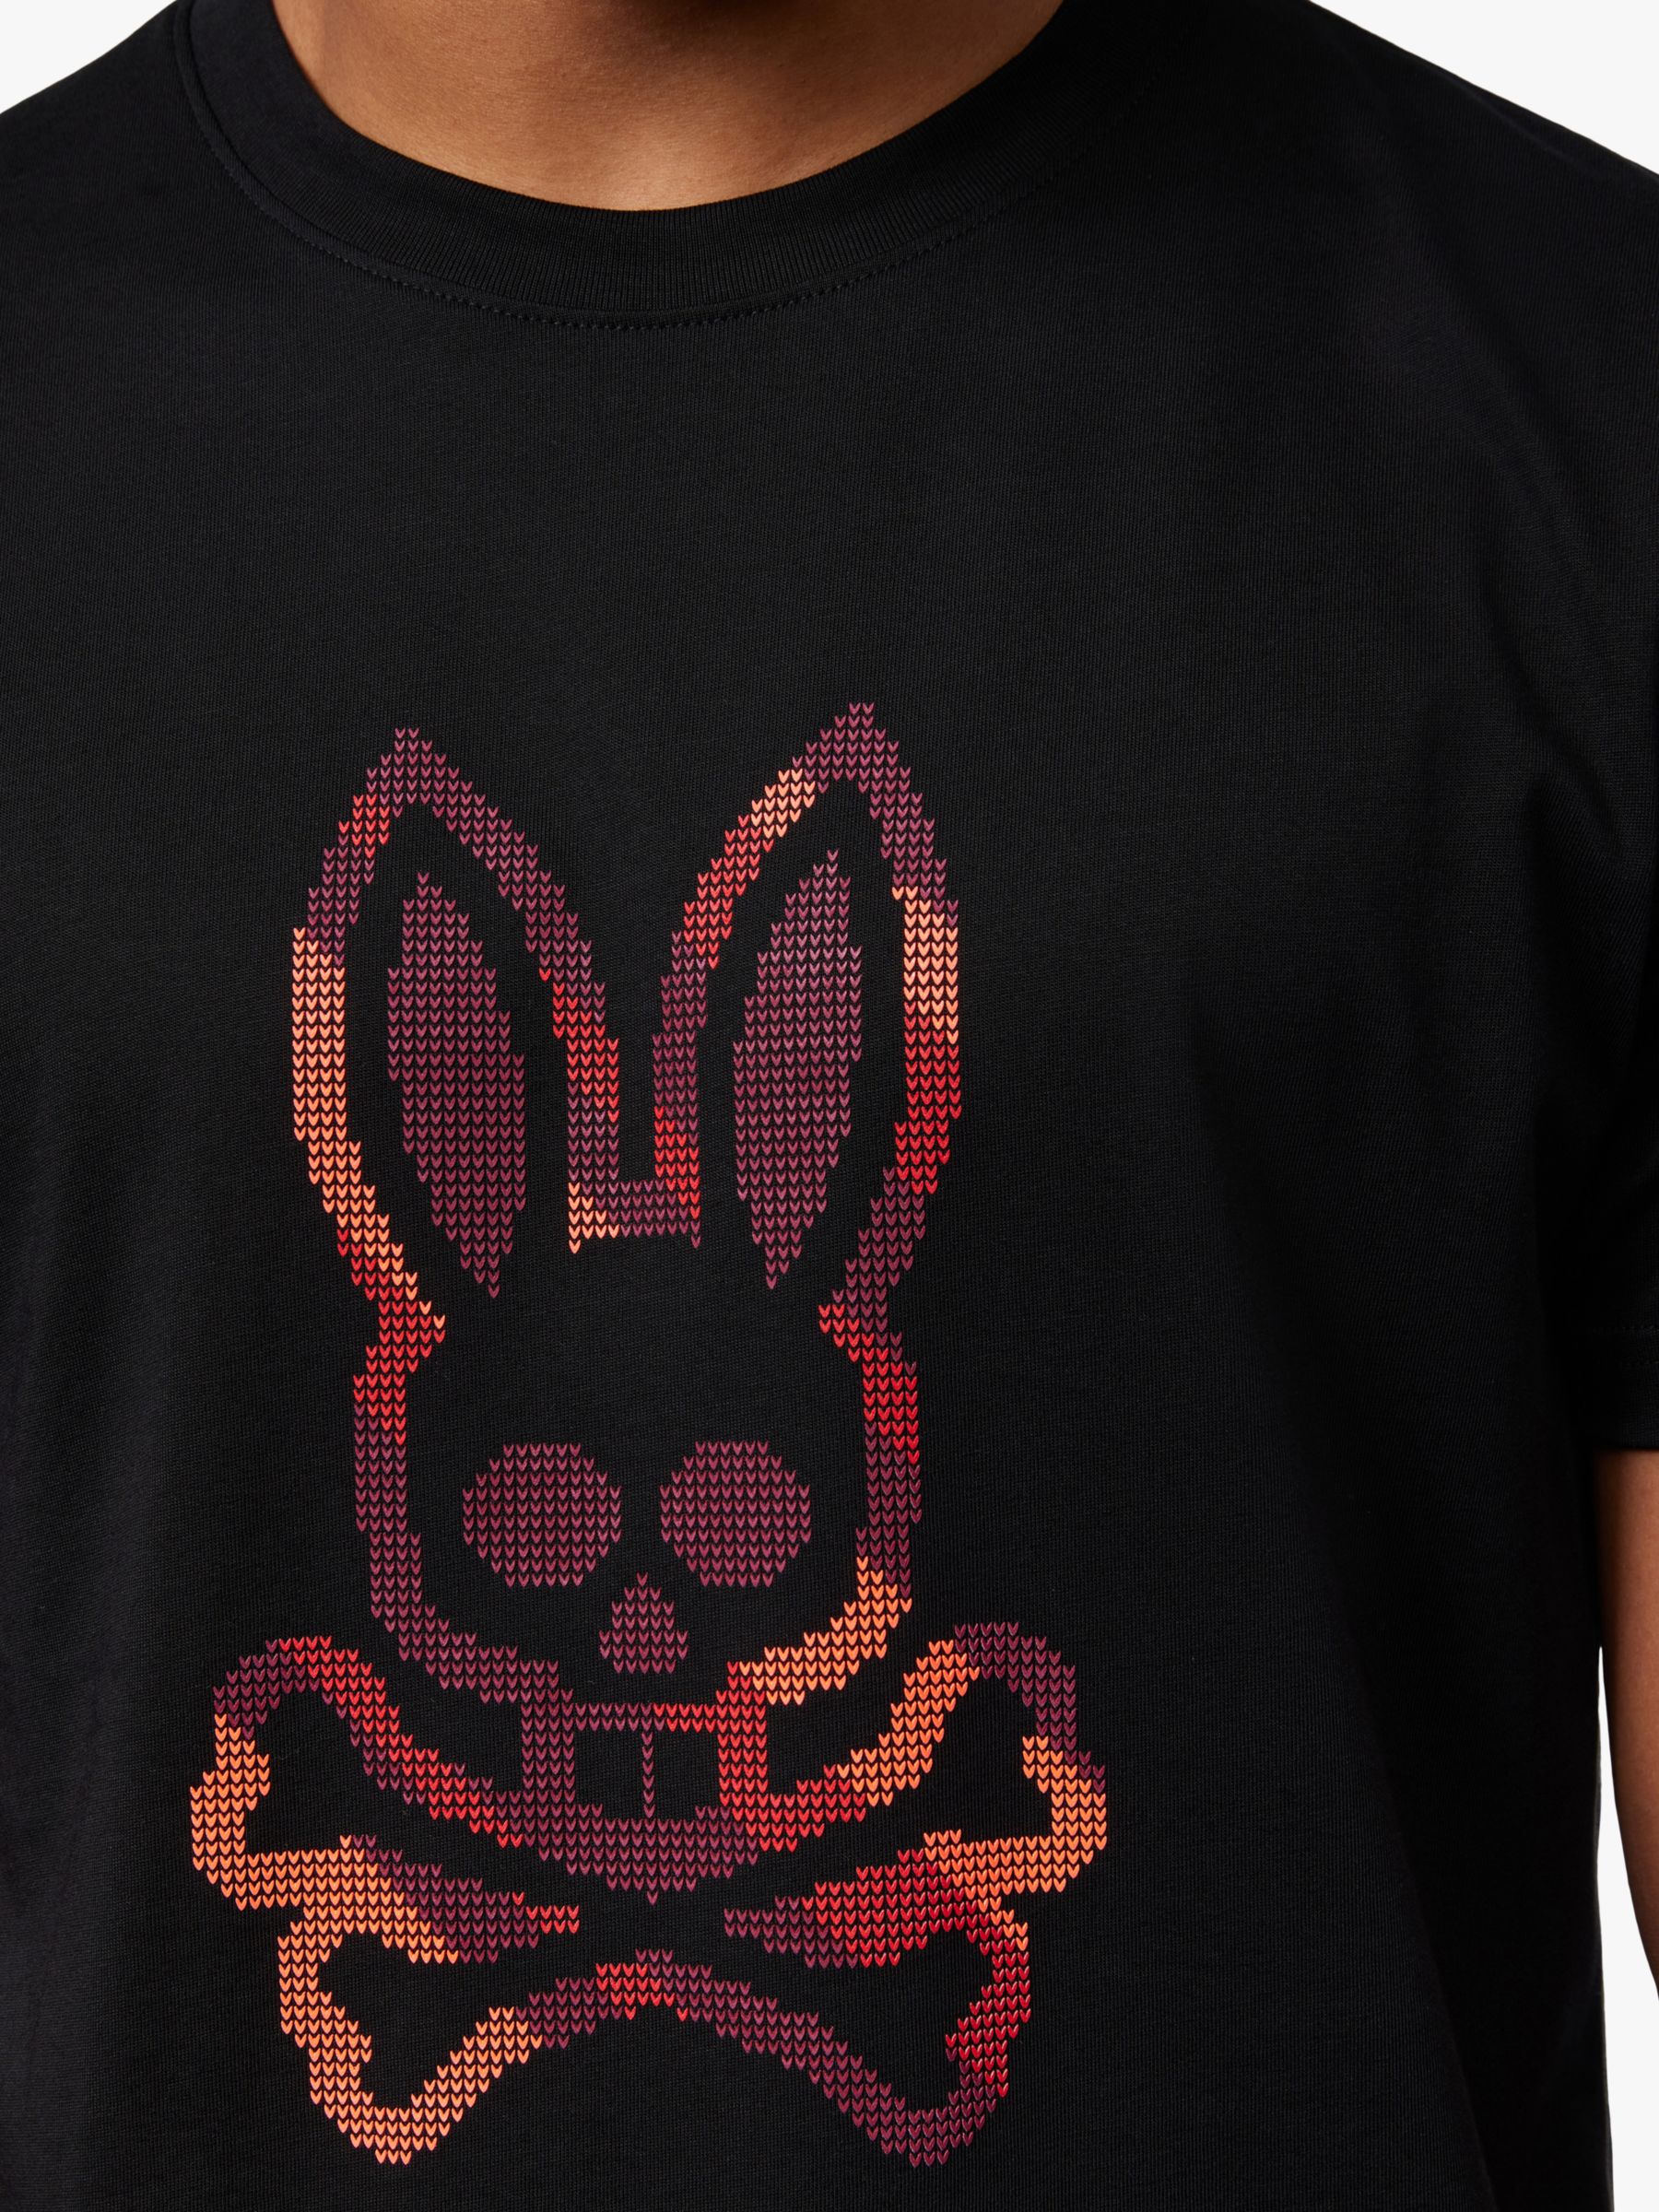 Psycho Bunny Apple Valley Graphic T-Shirt, Black/Multi, S